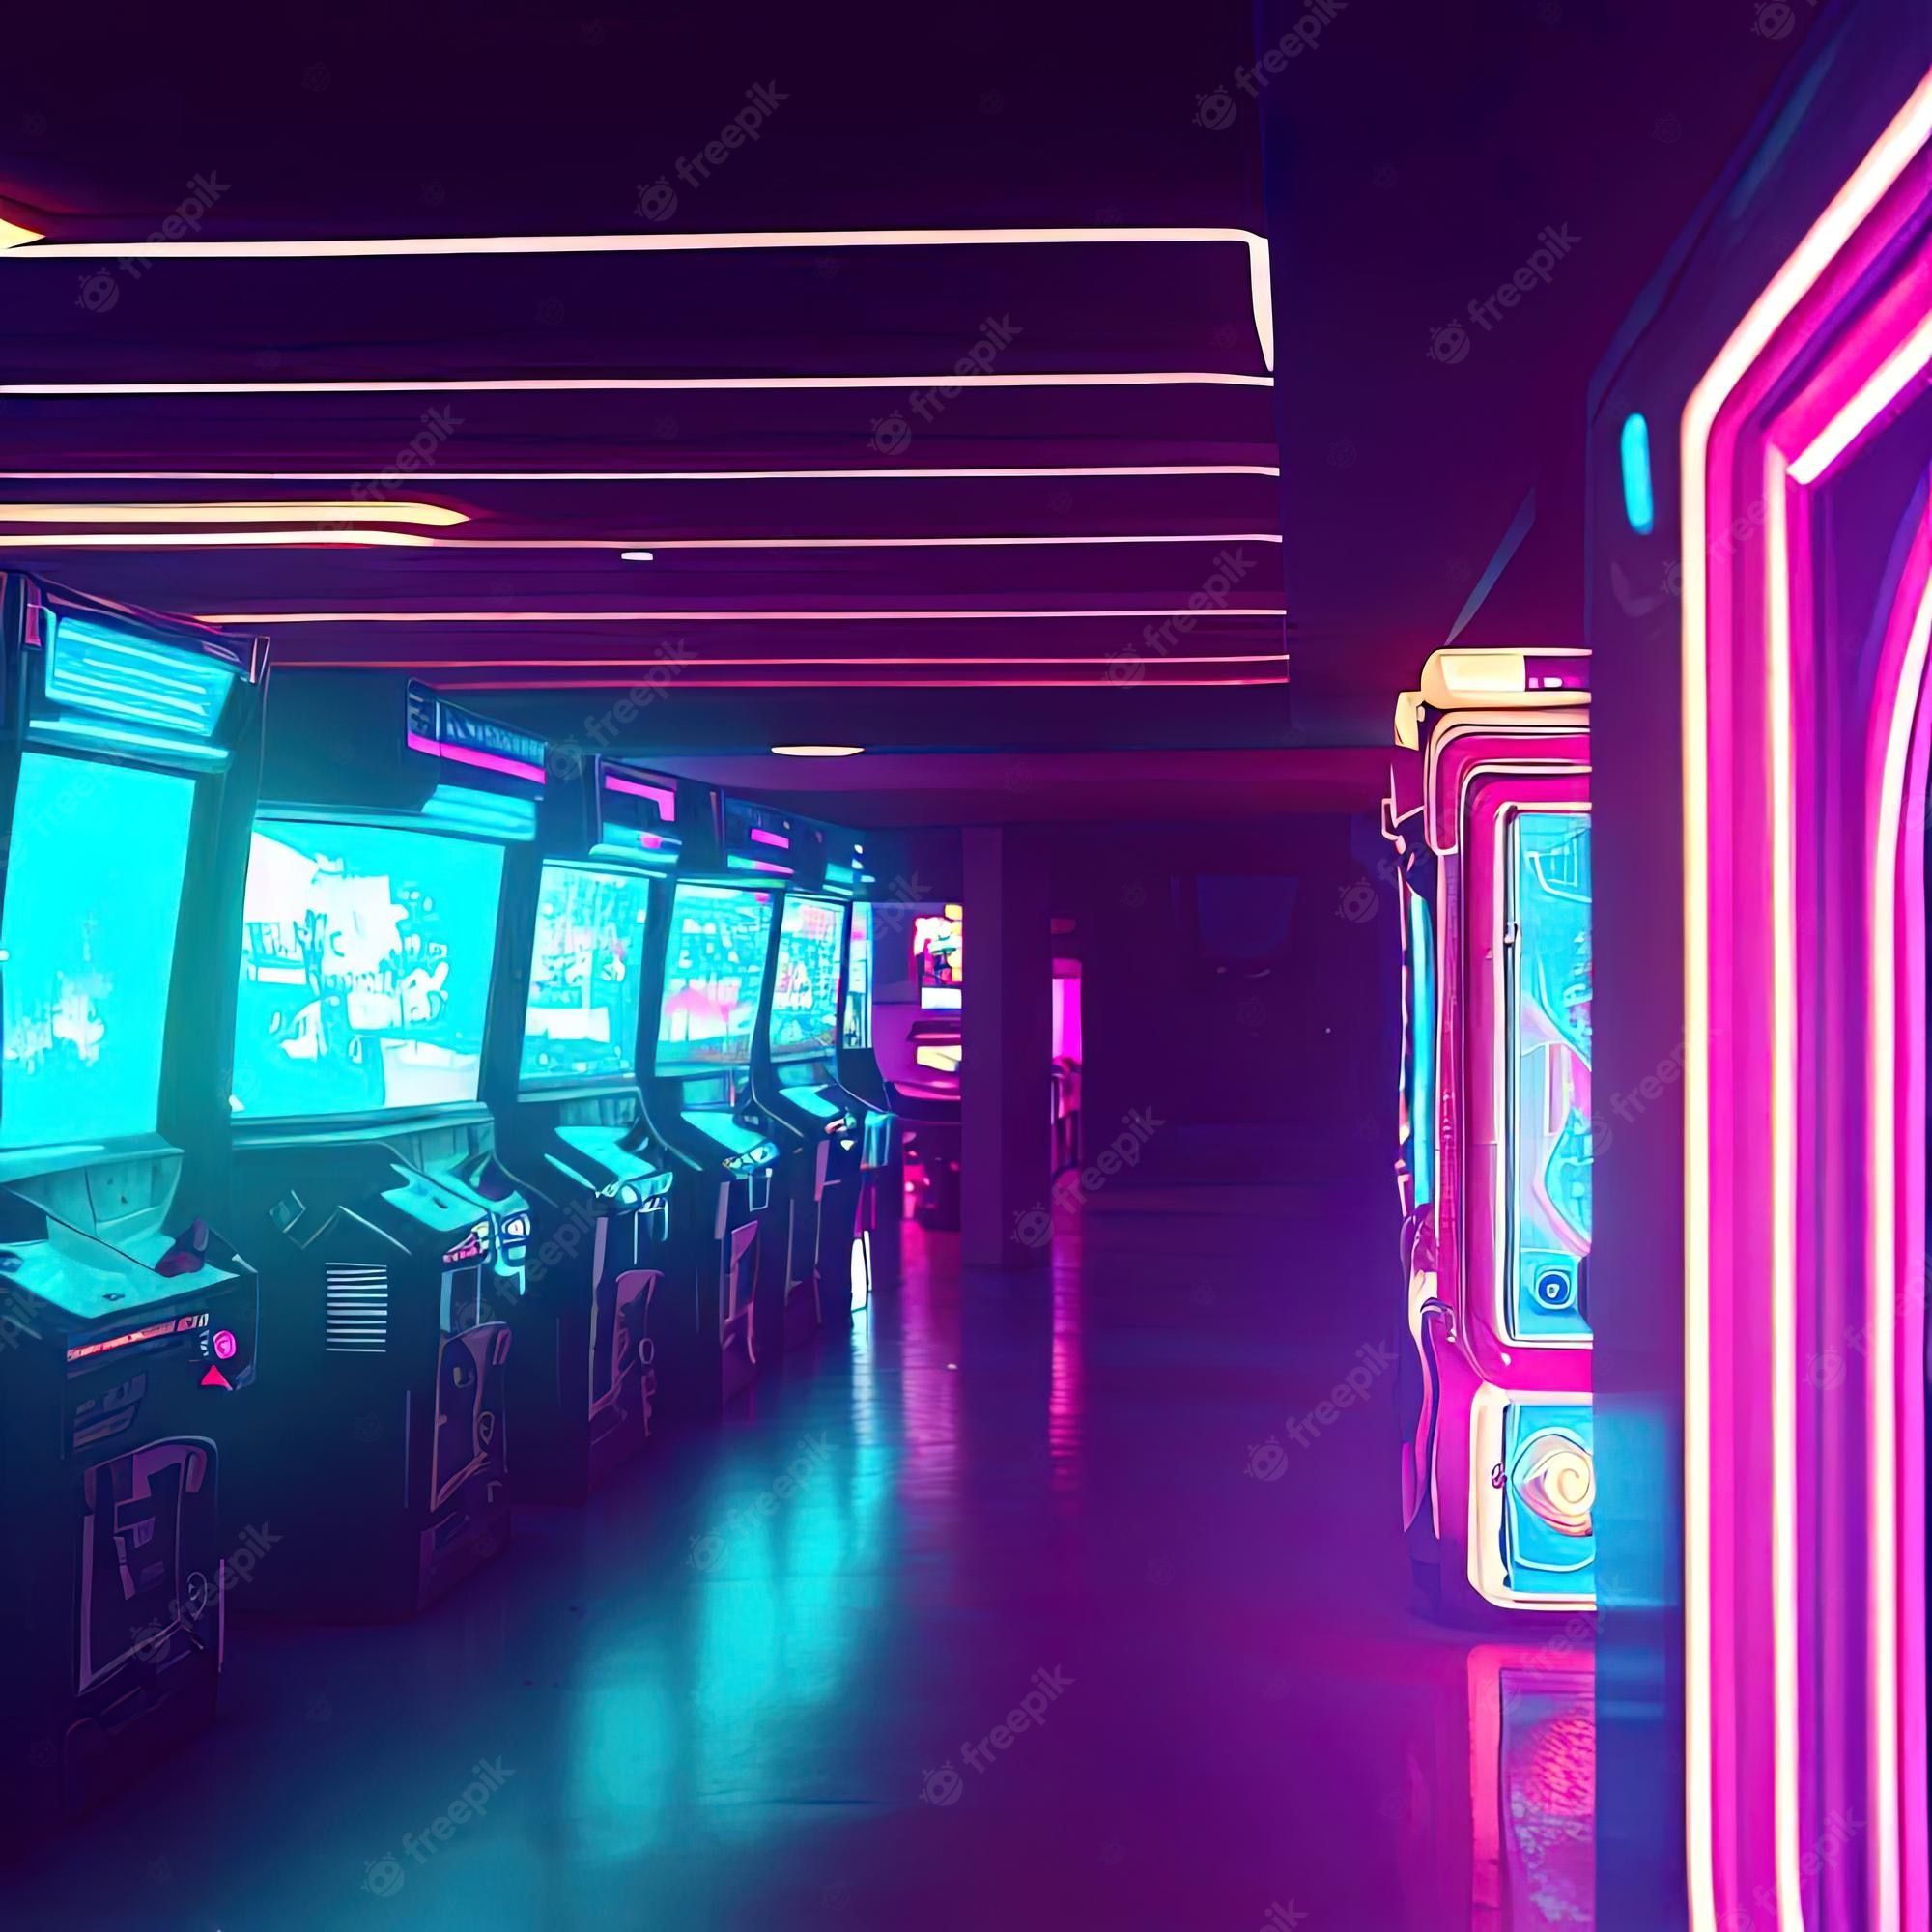 Arcade Room Image